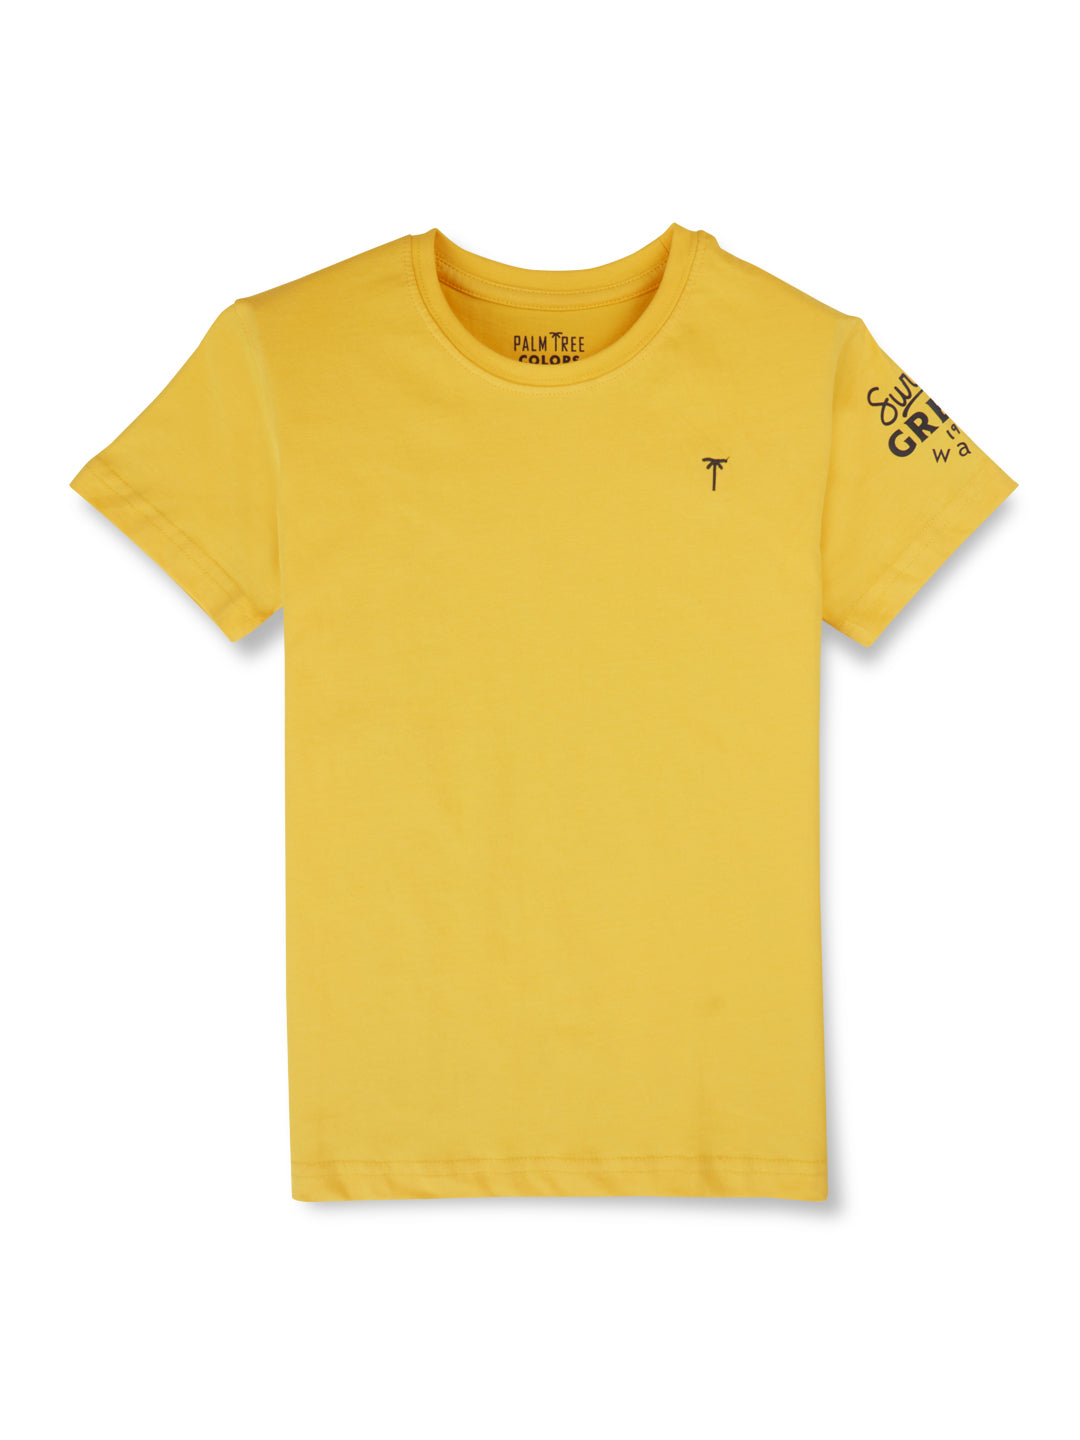 Boys Yellow Printed Cotton T-SHIRT HALF SLEEVES